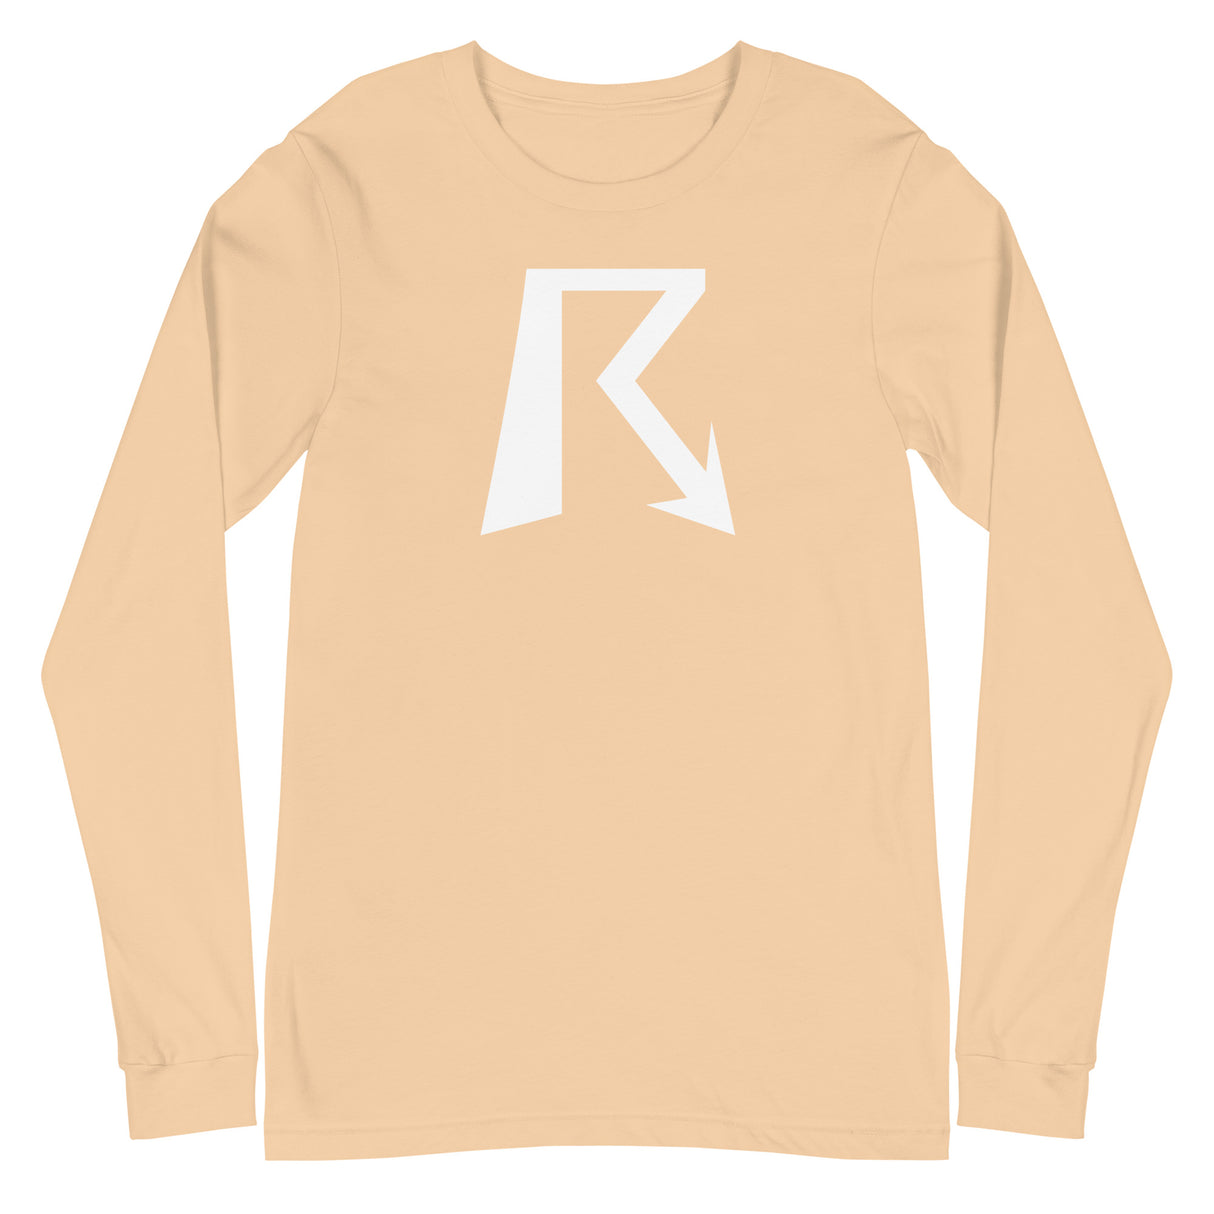 Natural Light 2-Color Logo Raglan T-Shirt White/True Royal / Small